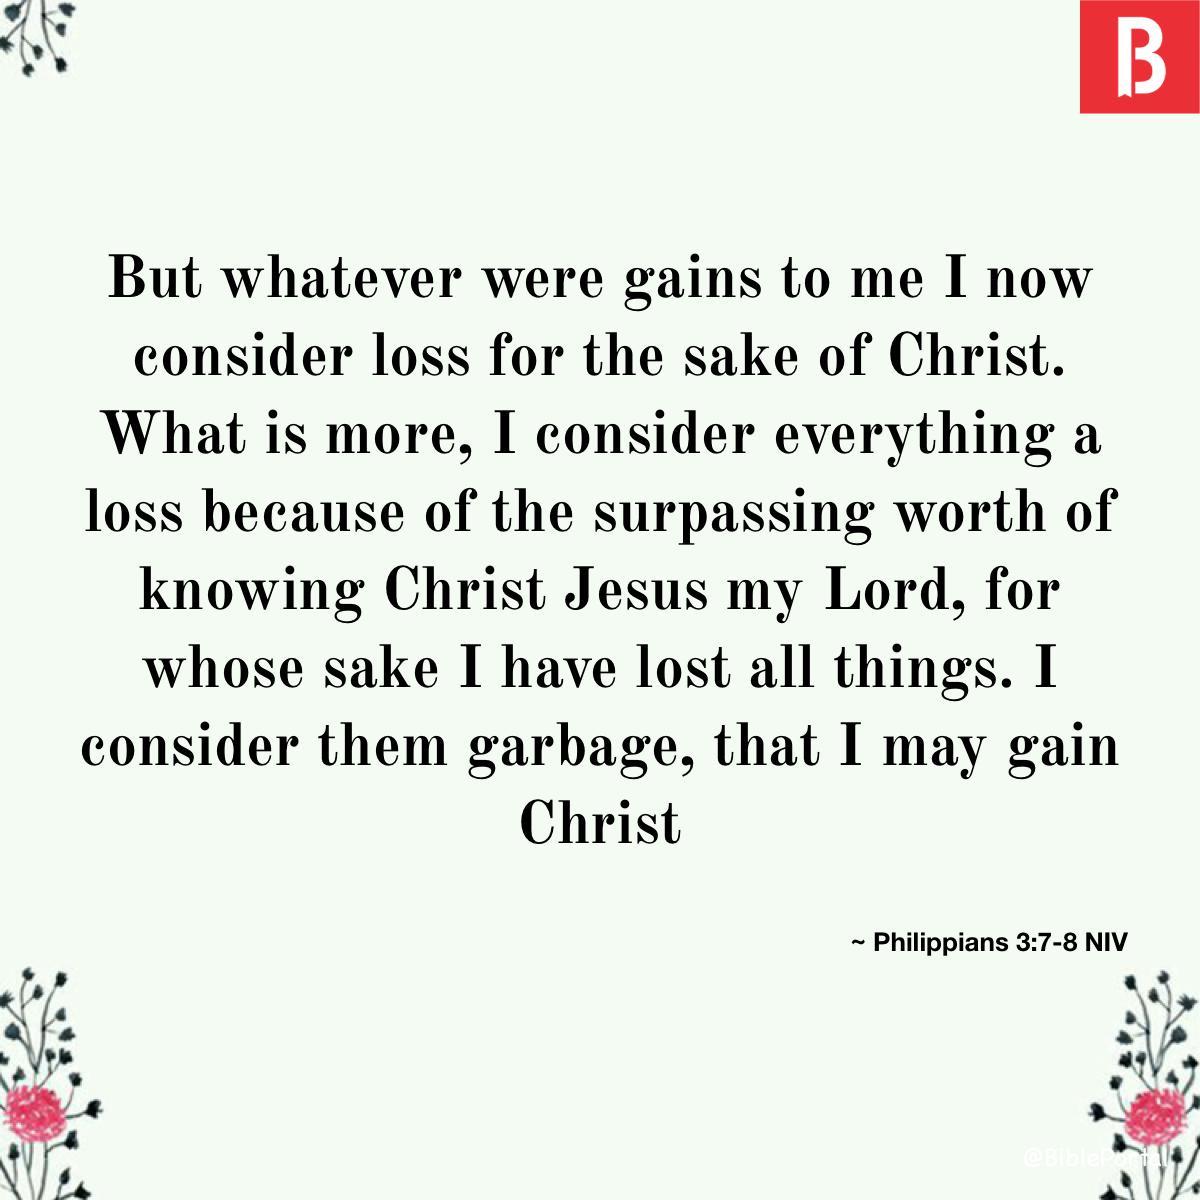 Philippians 3:7-8 NIV